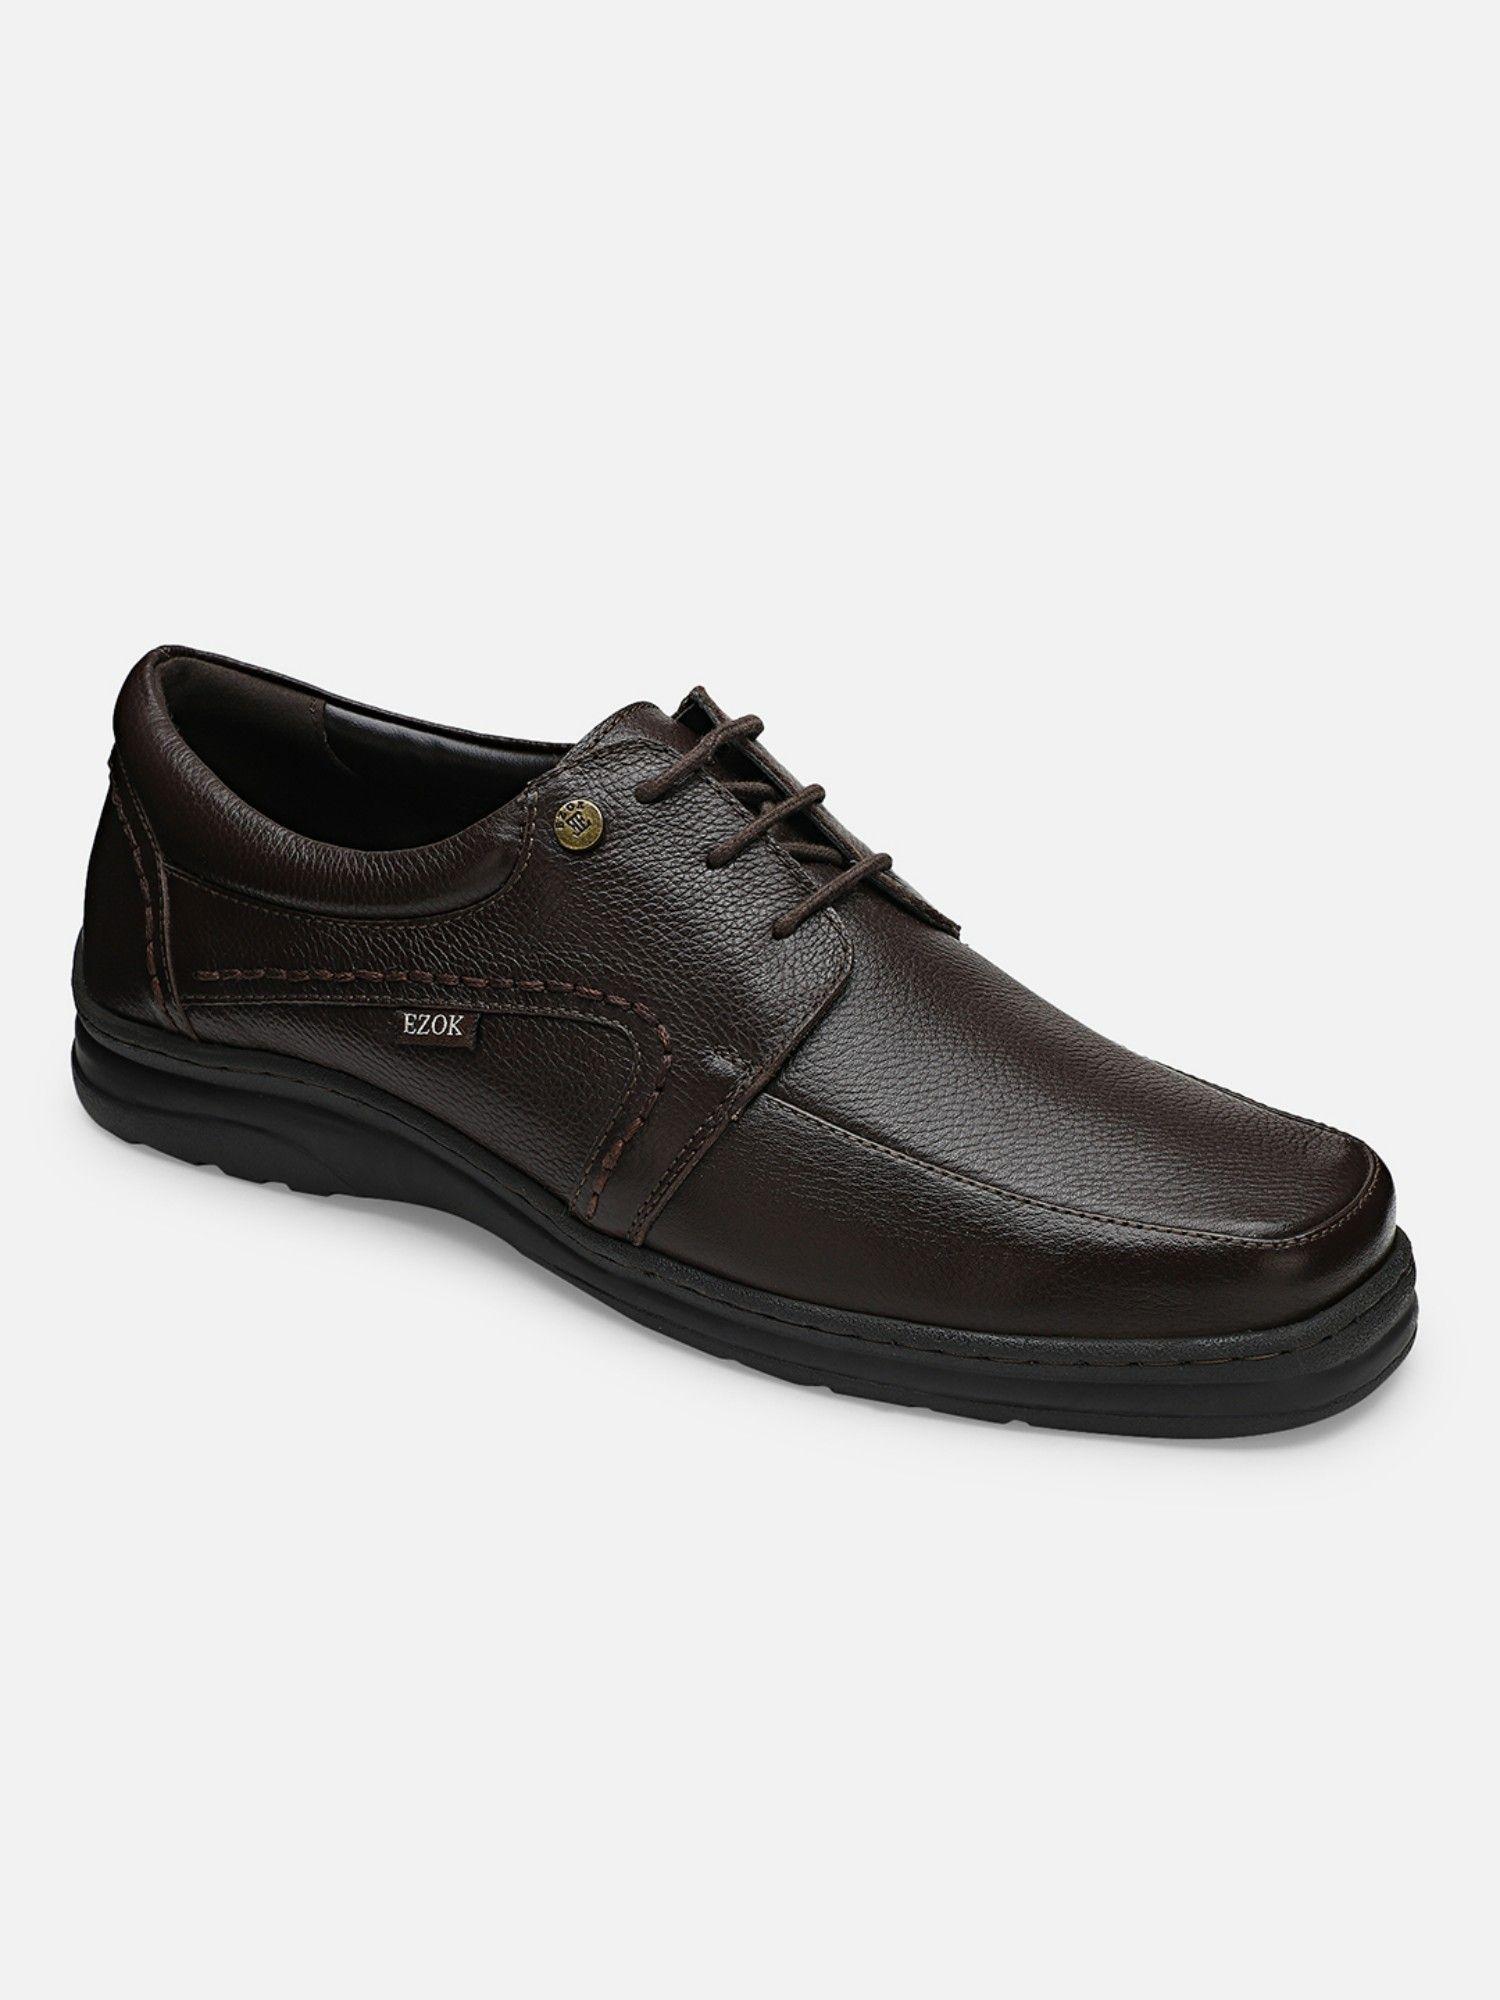 leather formal solid brown derbies for men